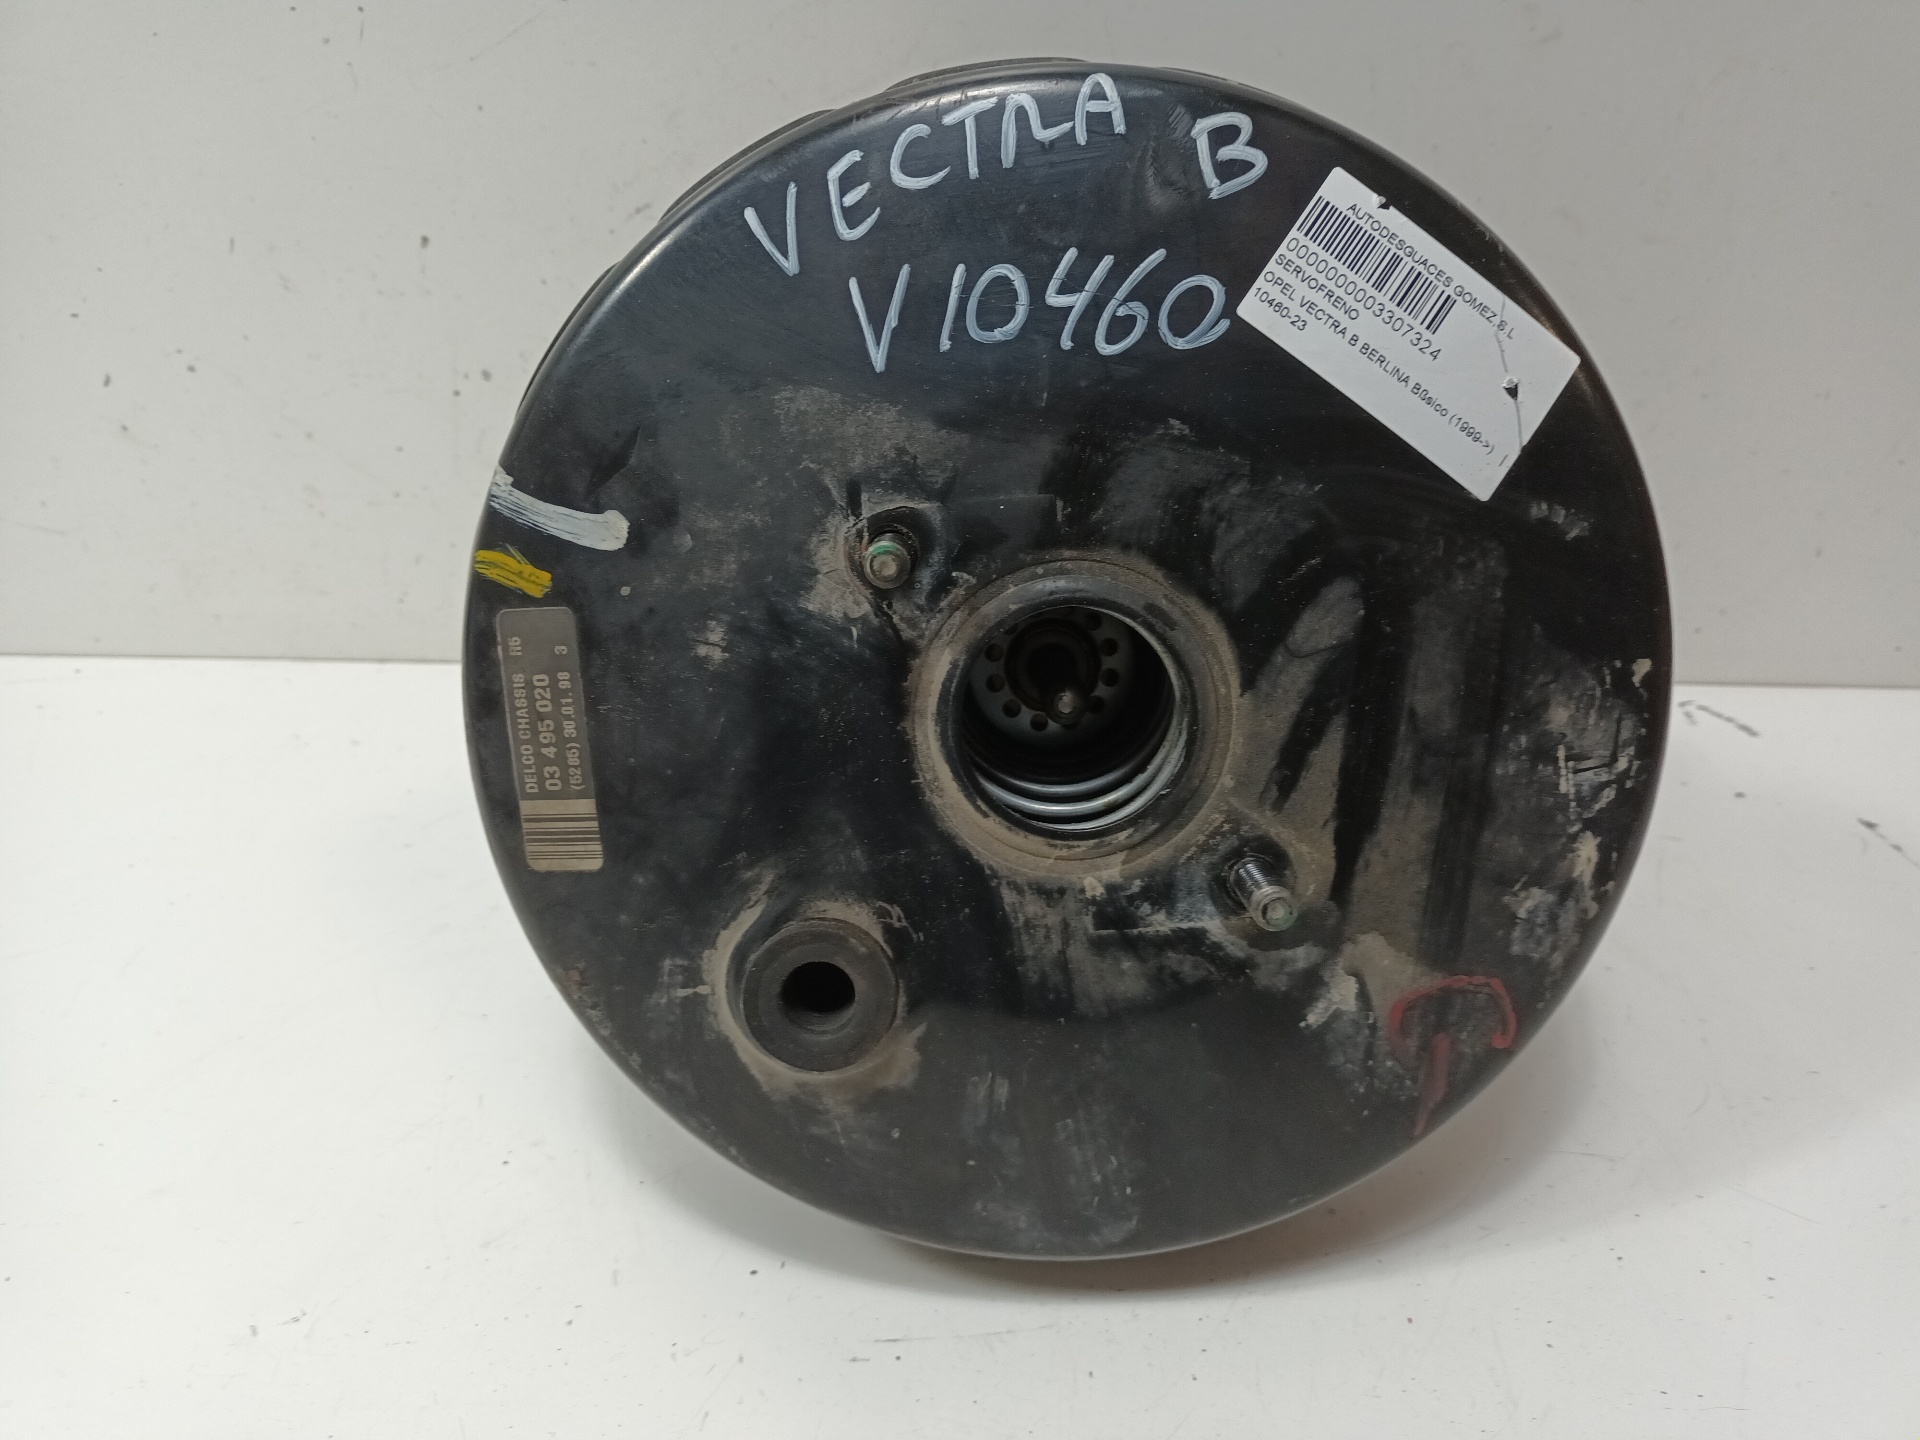 SUZUKI Vectra B (1995-1999) Bremseservoforsterker 03495020 22766016